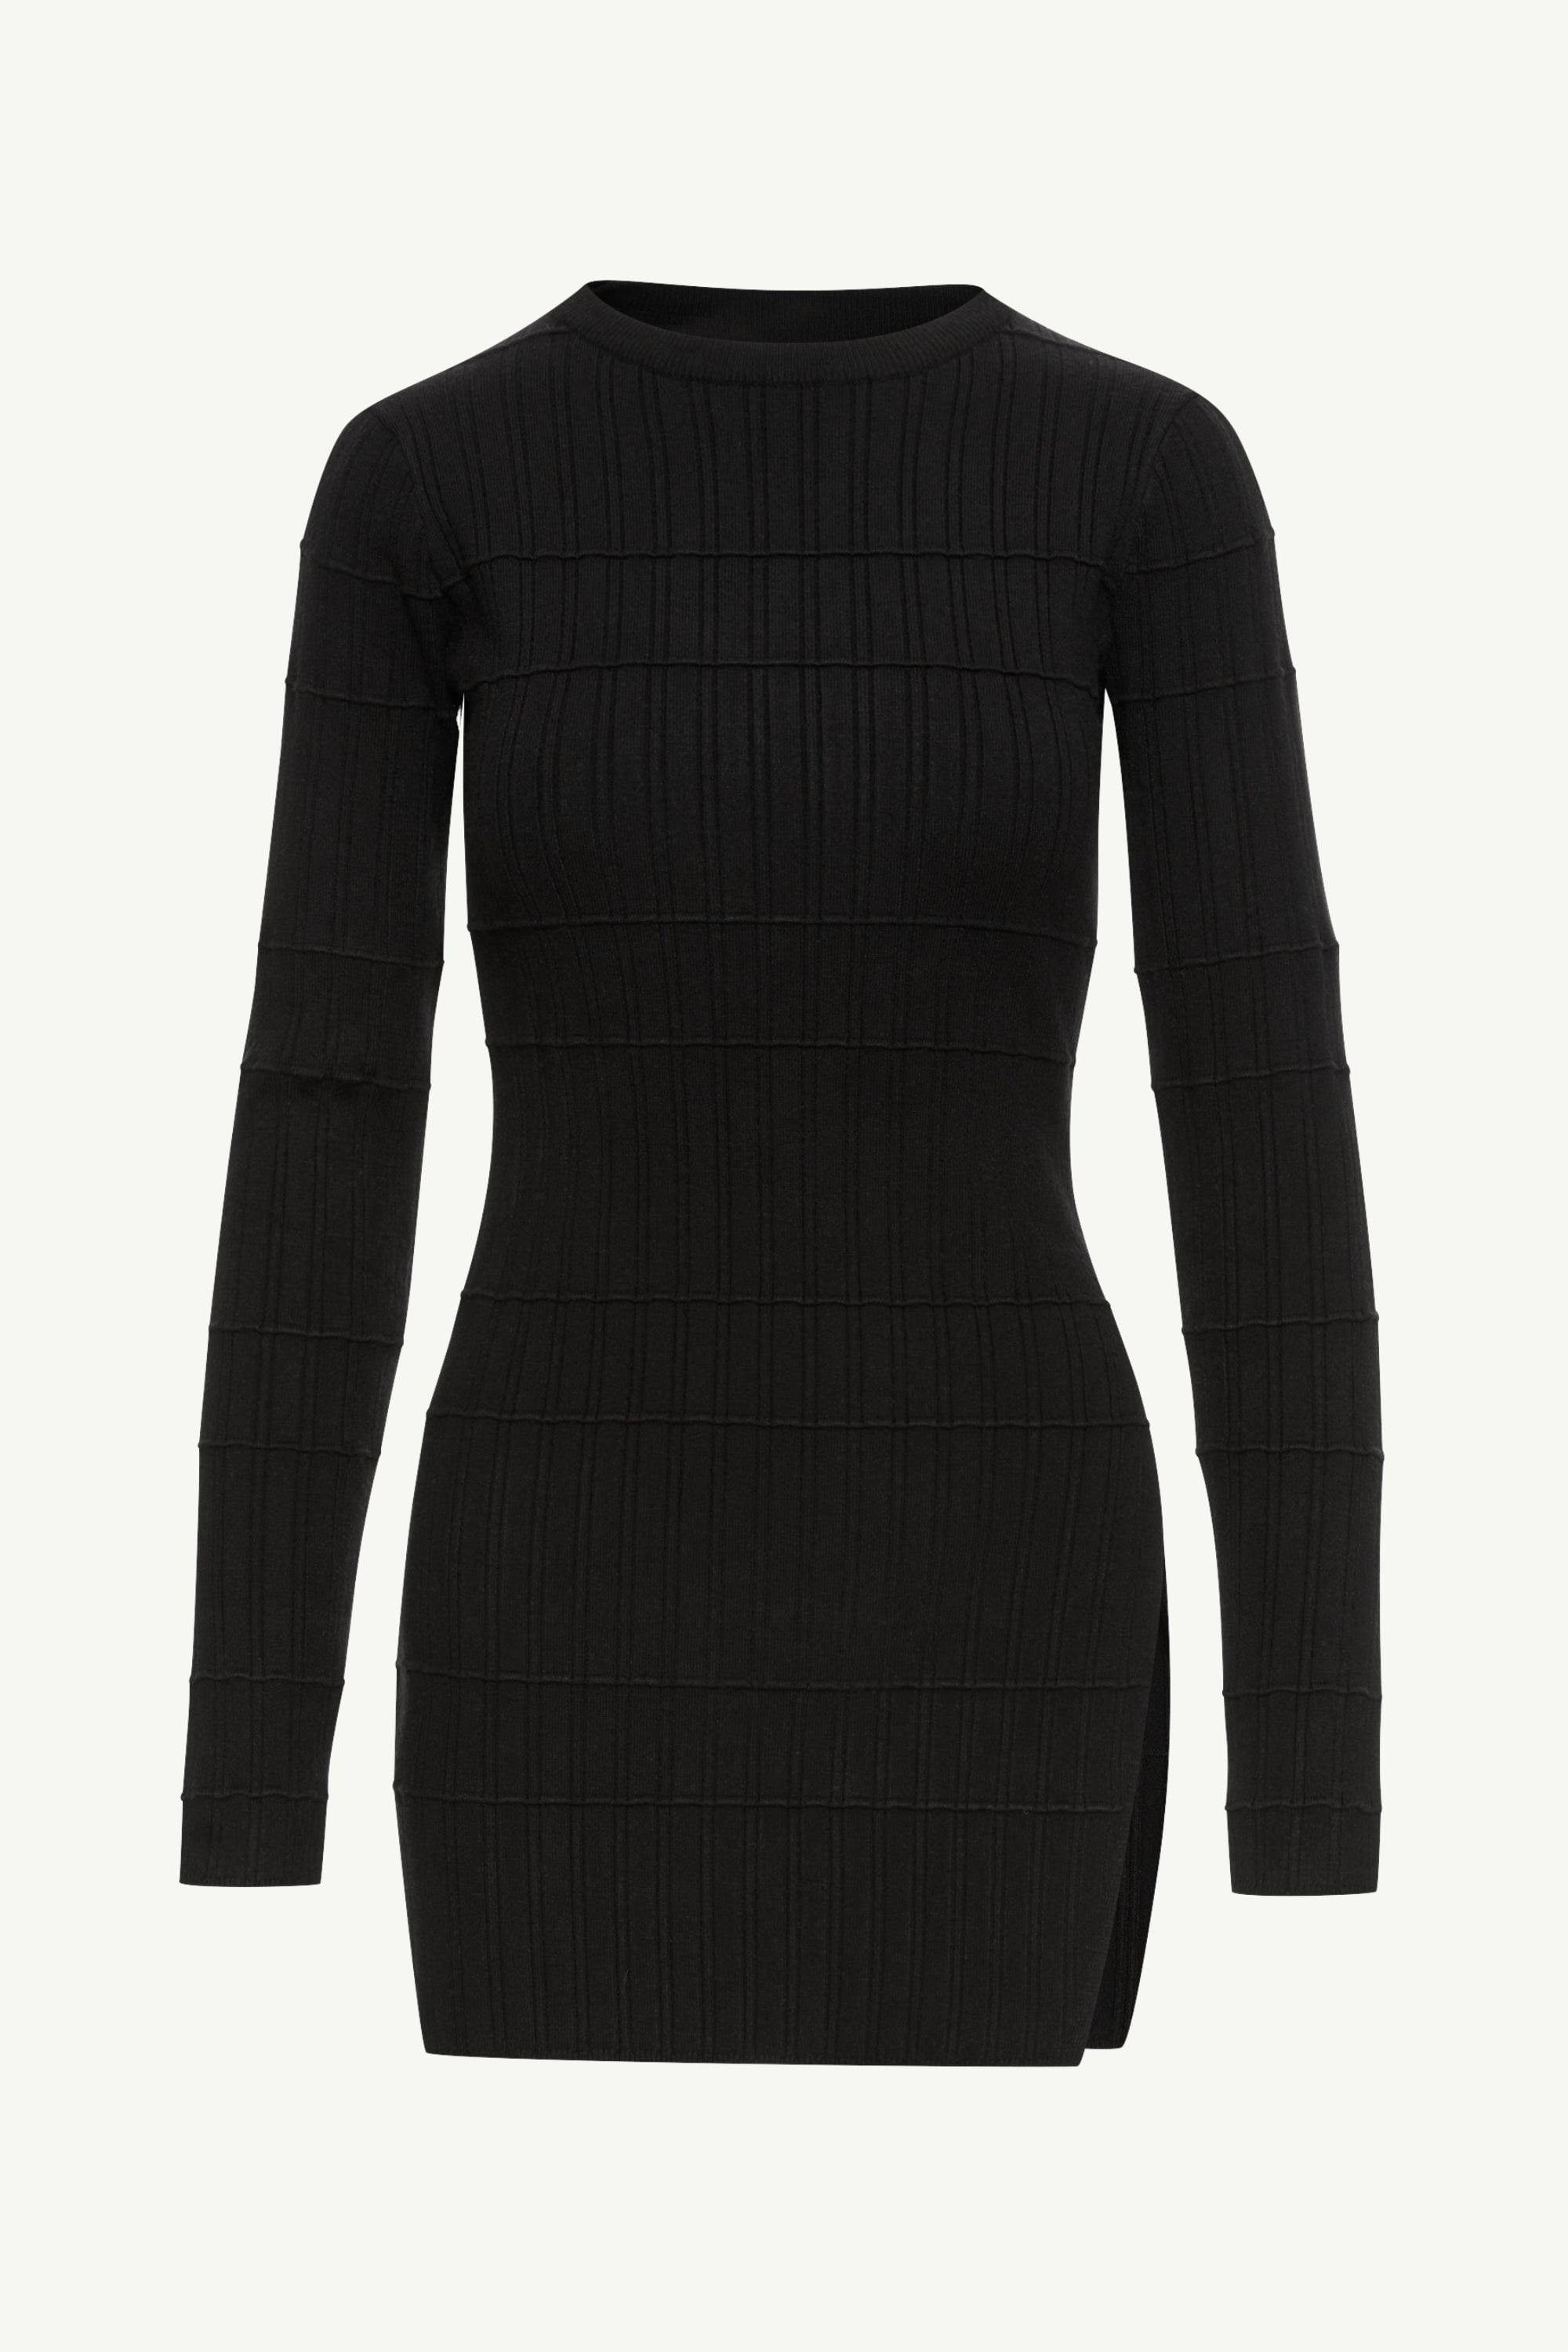 Milano Ribbed Knit Split Hem Top - Black Clothing Veiled 